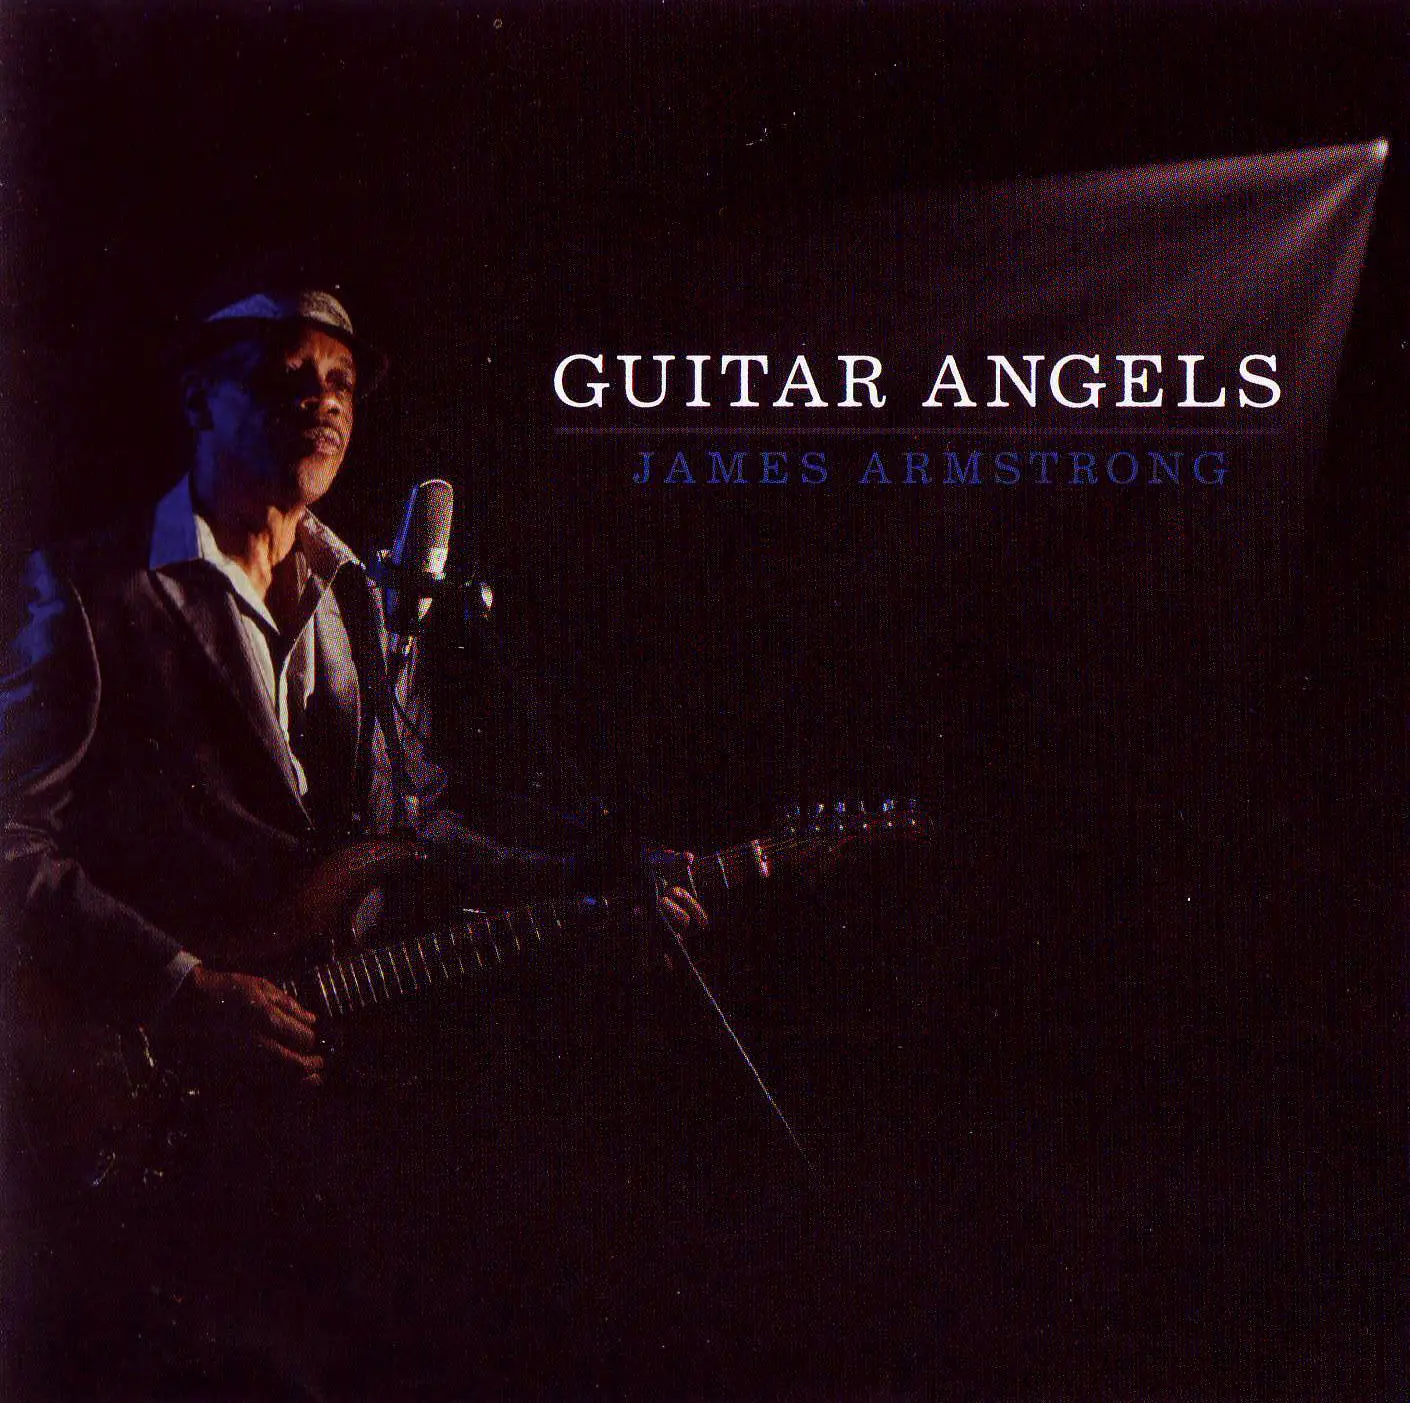 Flac 2014. James Armstrong Guitar Angels 2014. James Armstrong обложка альбома. Ангел блюз с гитарой. Modern Electric Blues.